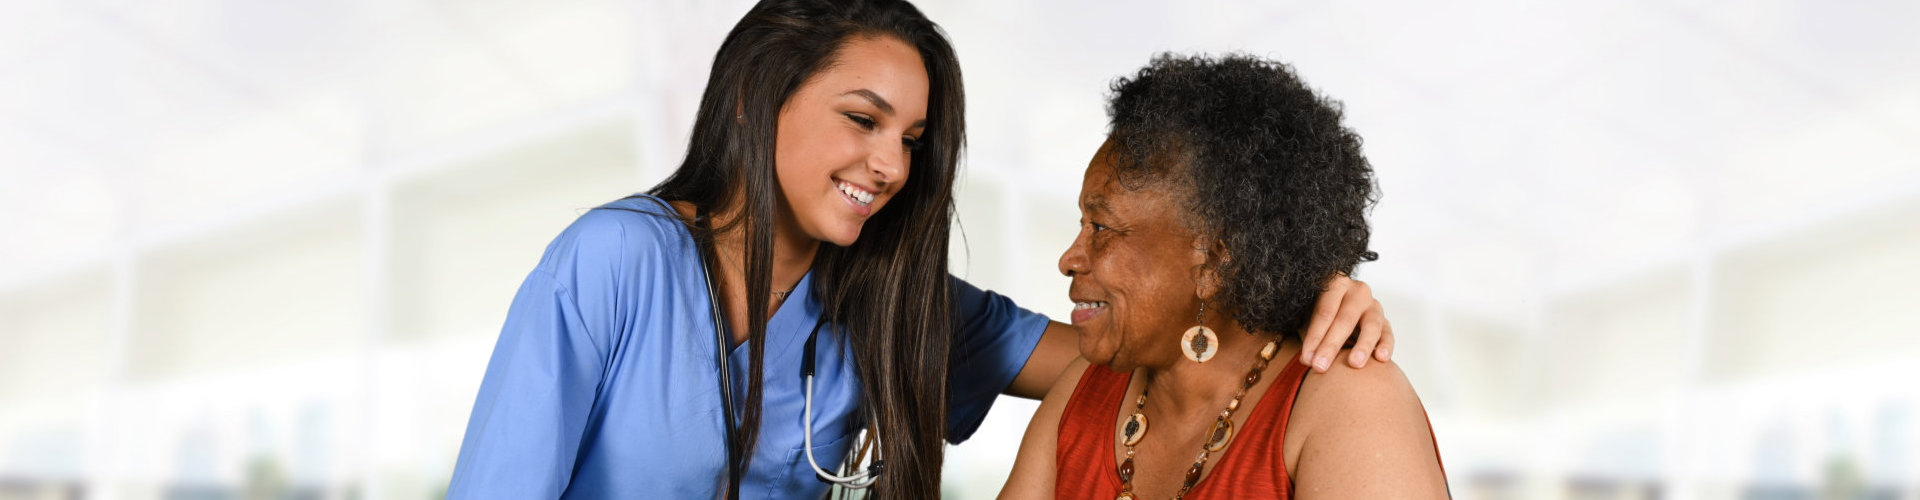 senior woman with her nurse smiling